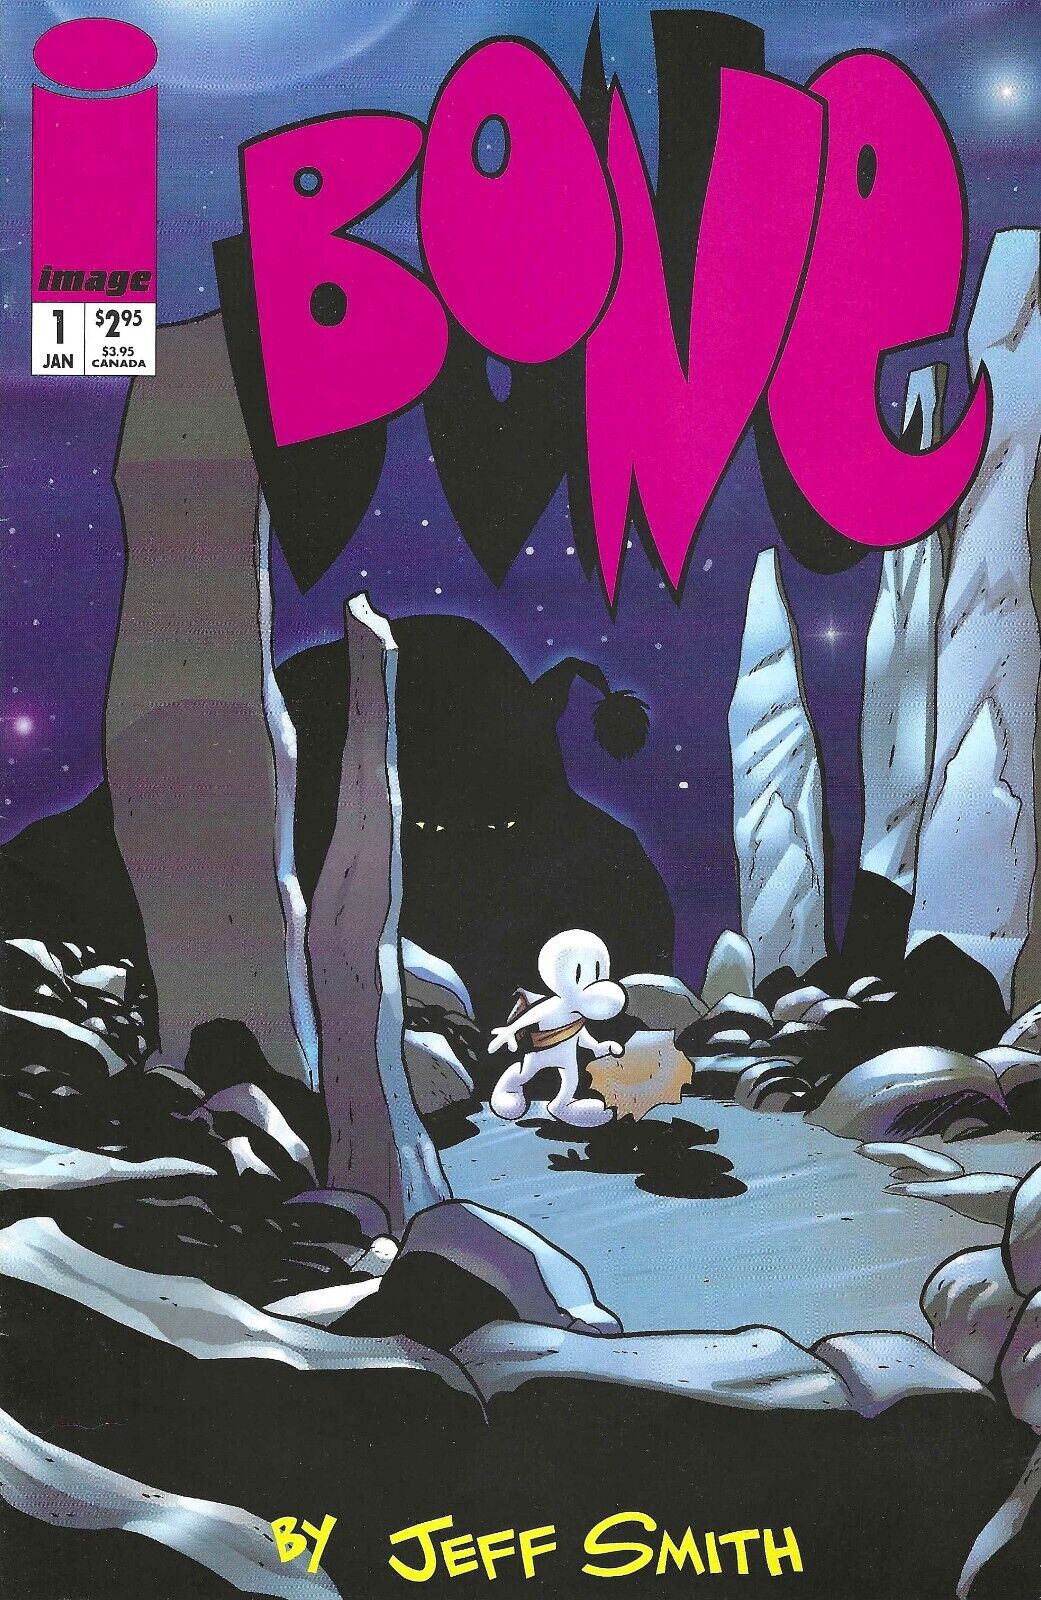 BONE #1 by Jeff Smith (Image Comics, 1996) High Grade